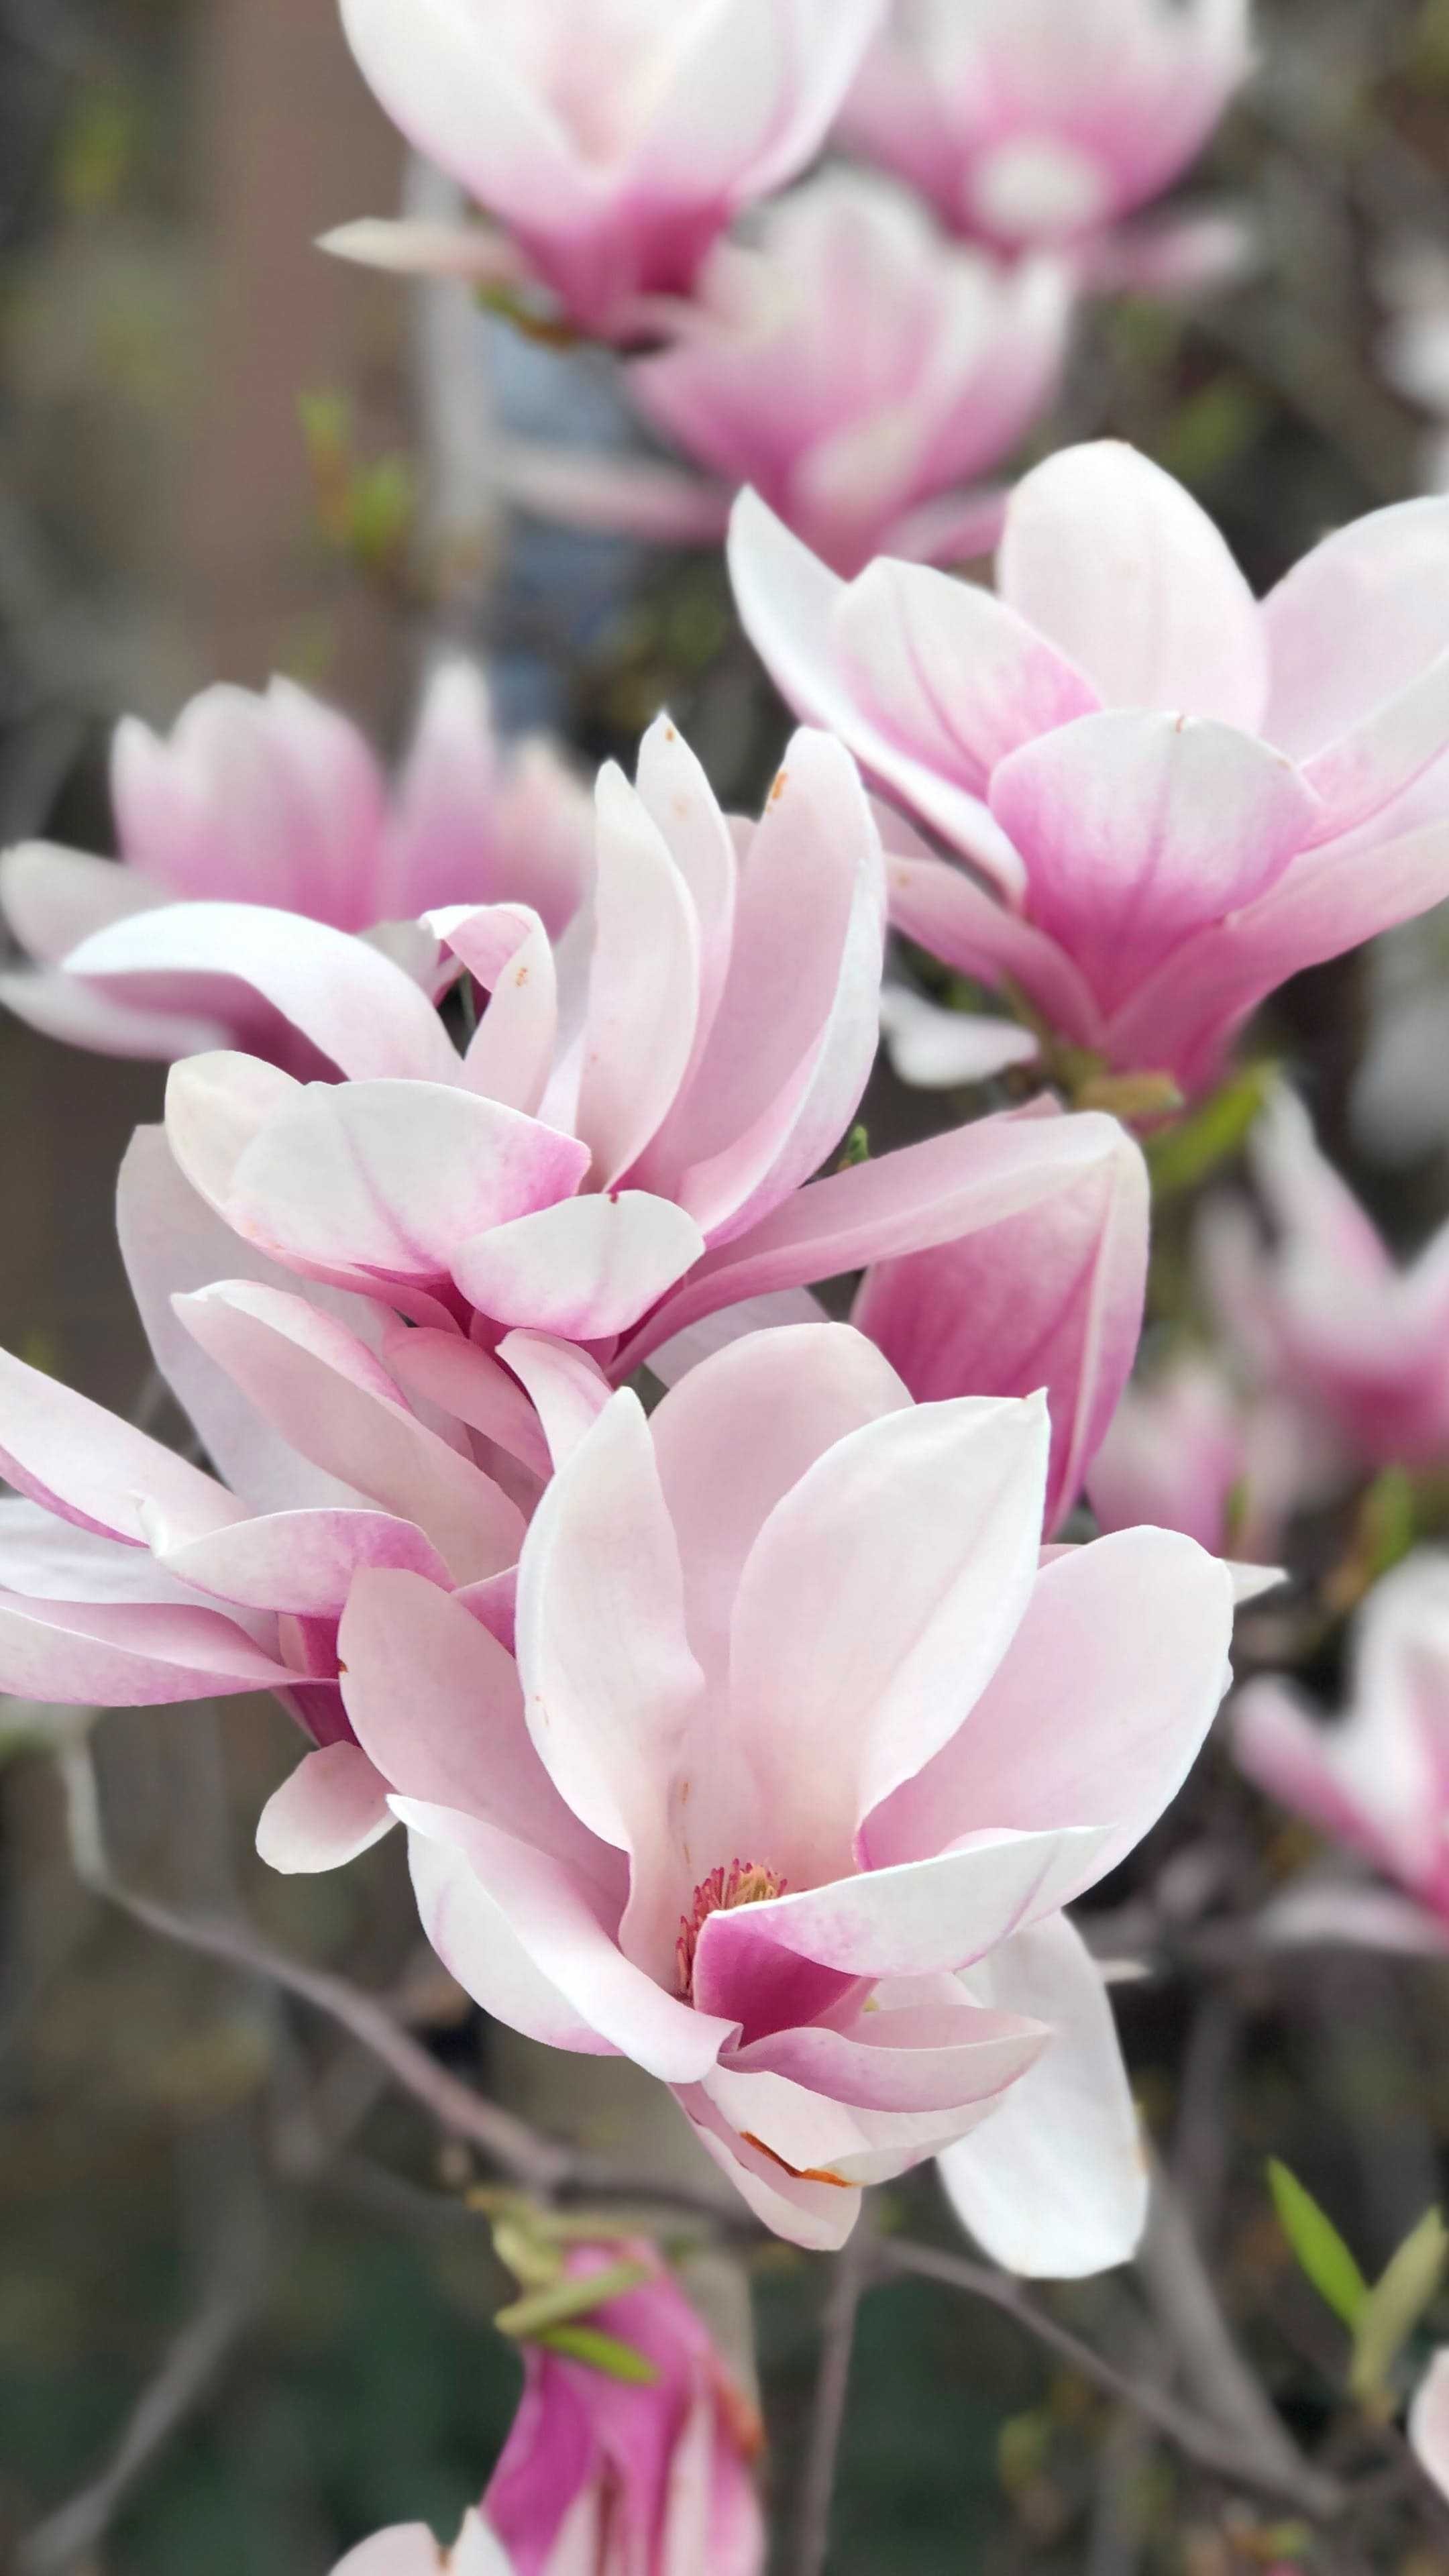 Magnolia wallpapers, Nature's grace, Floral wonderland, Elegant blossoms, 2160x3840 4K Handy